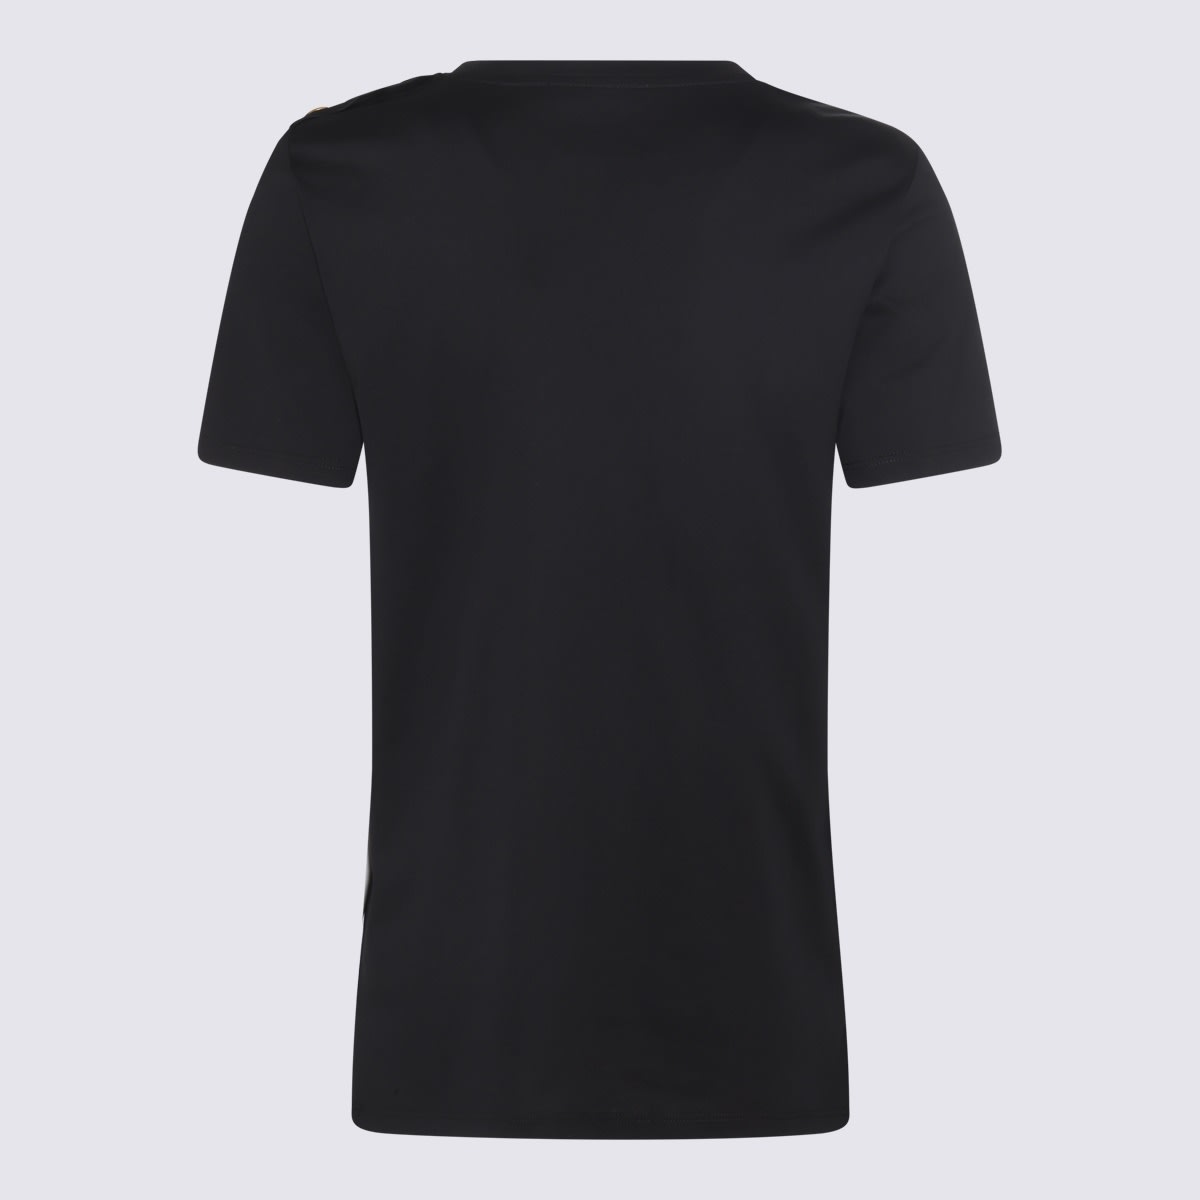 Shop Balmain Black And White Cotton T-shirt